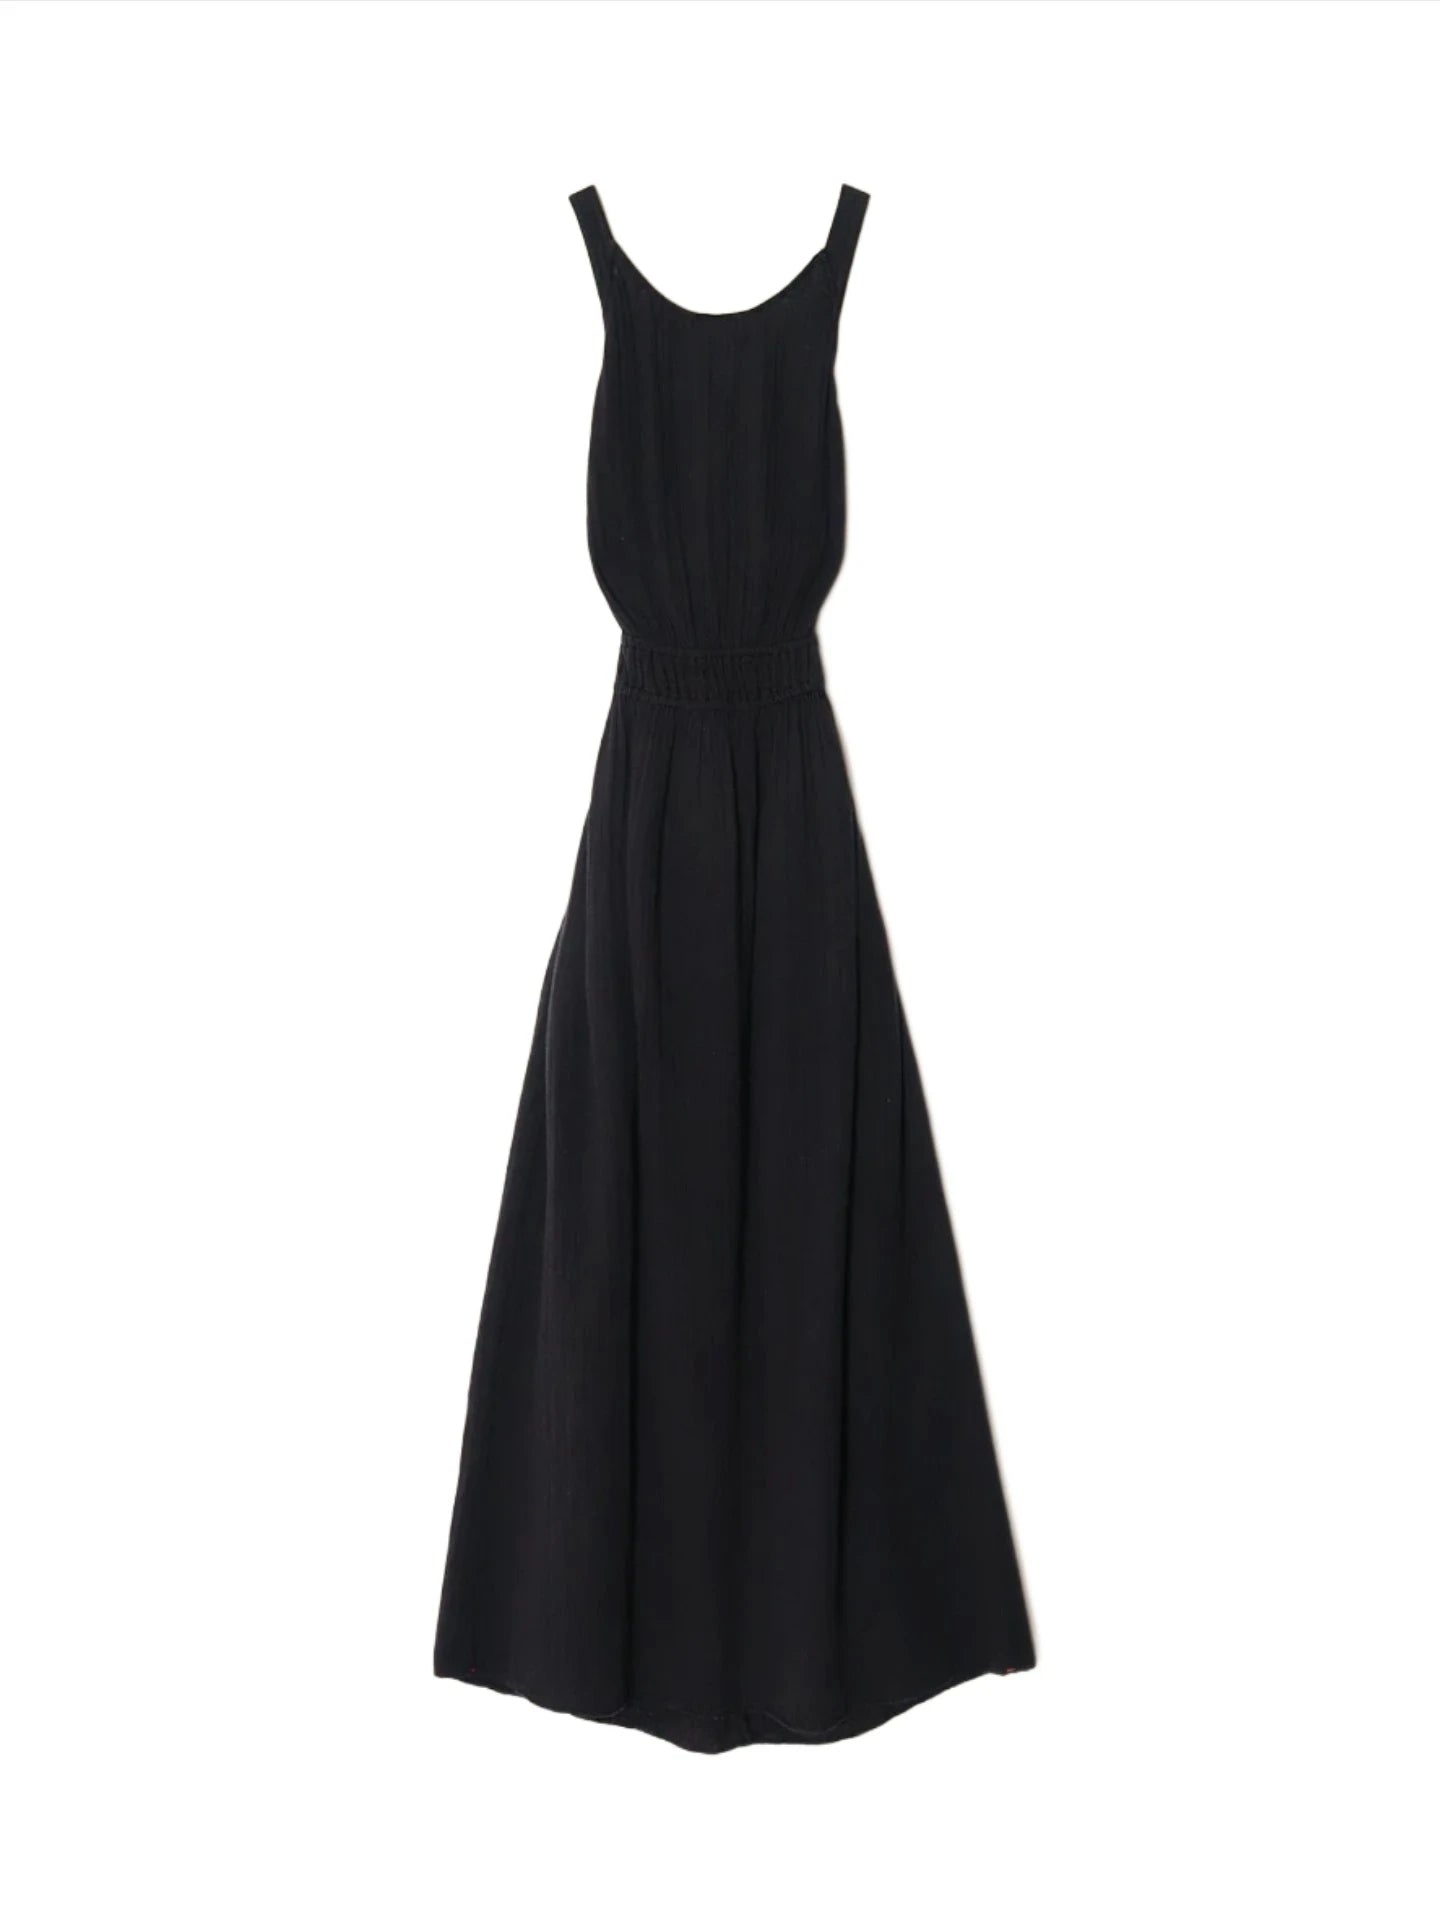 Sienna Dress in Black